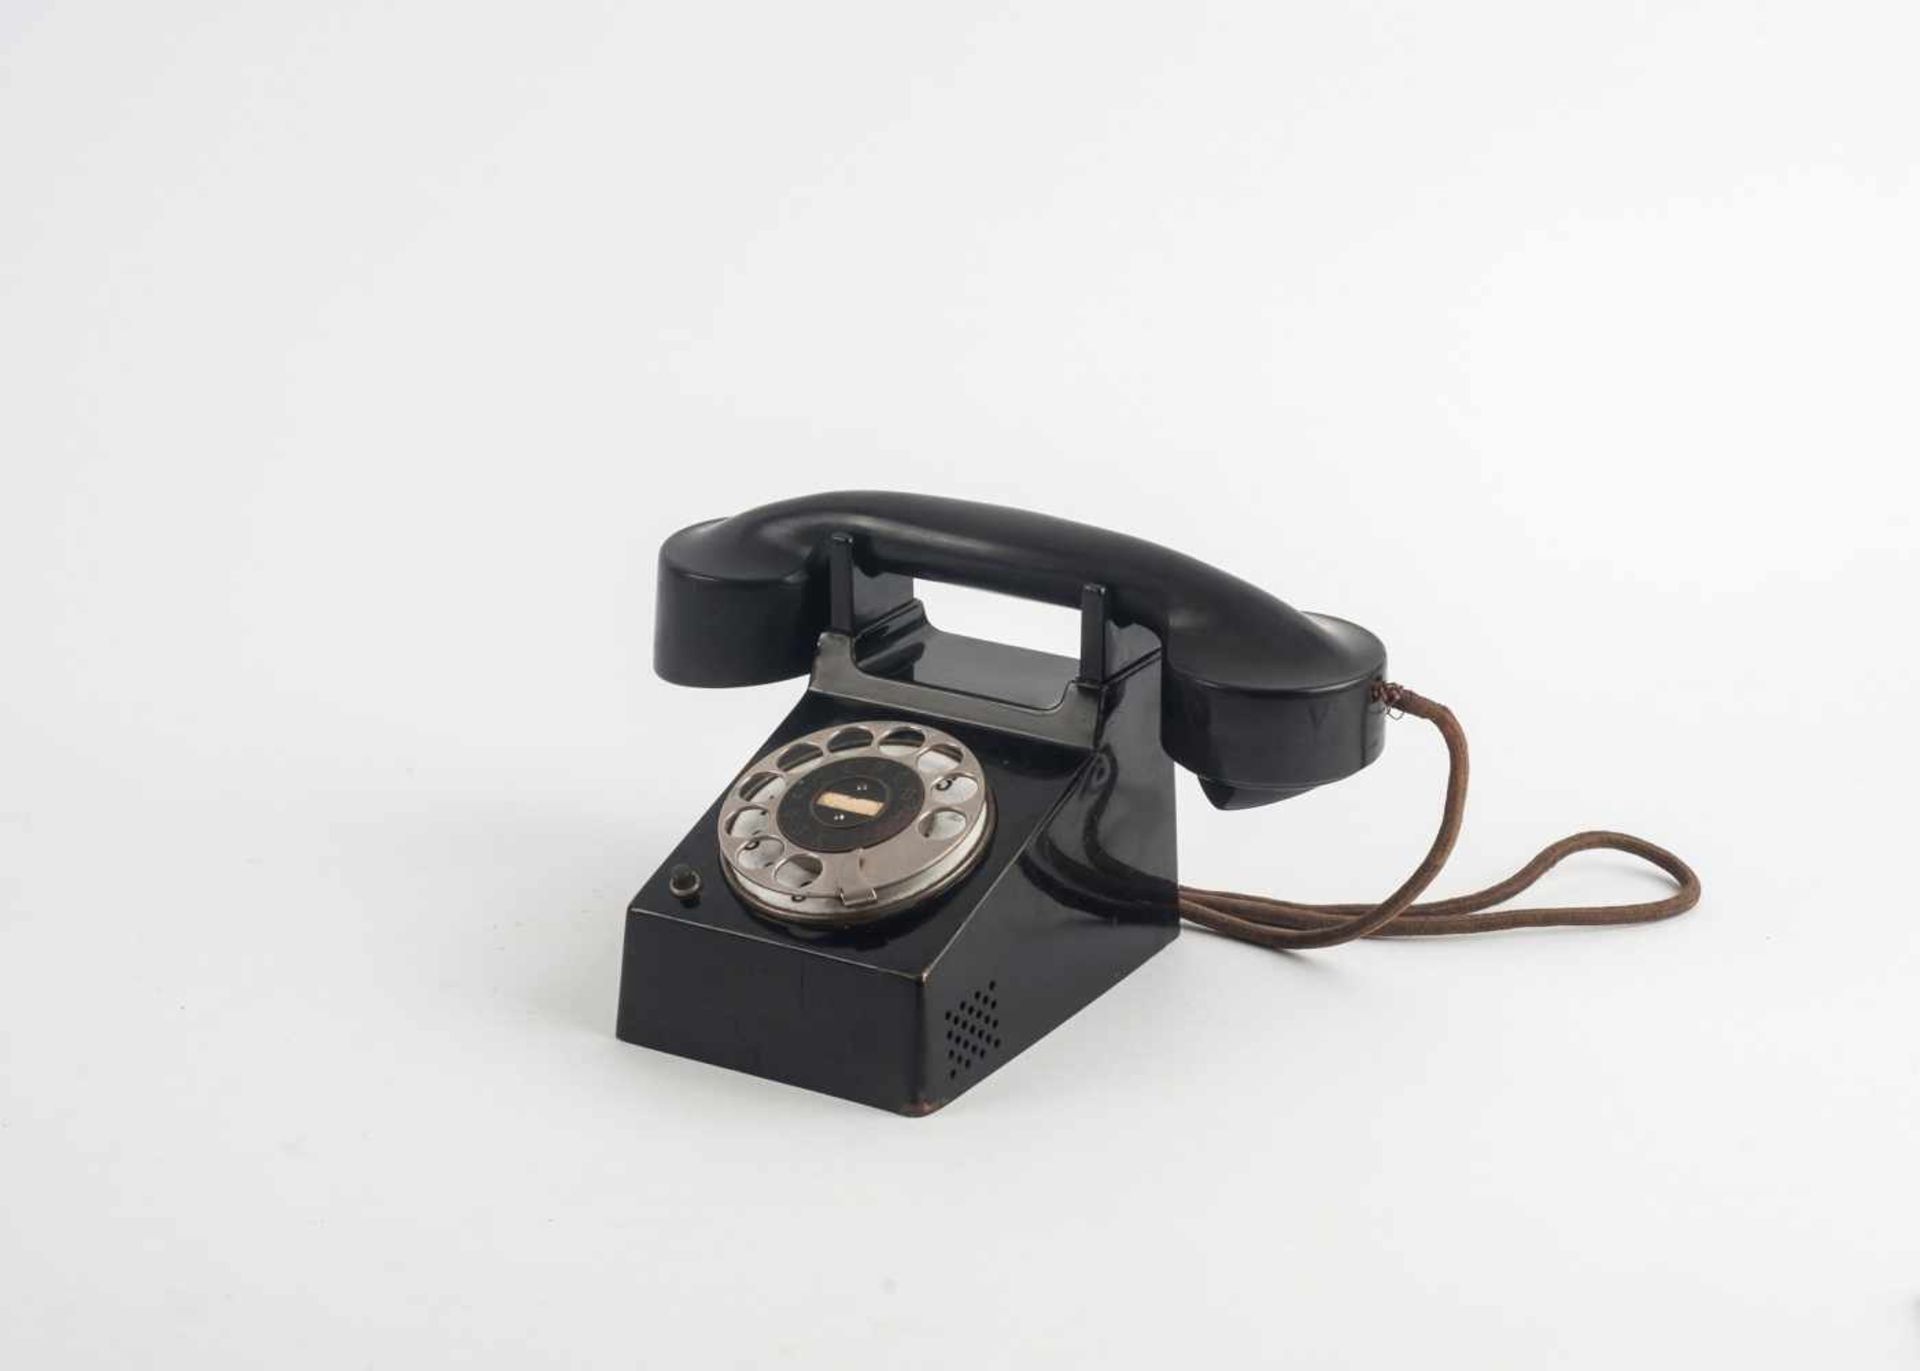 Bauhaus Dessau 'Bauhaus'-Telefon, 1929 H. 13,2 x 11,2 x 15,8 cm; Hörer: L. 24,8 cm. H. Fuld u.